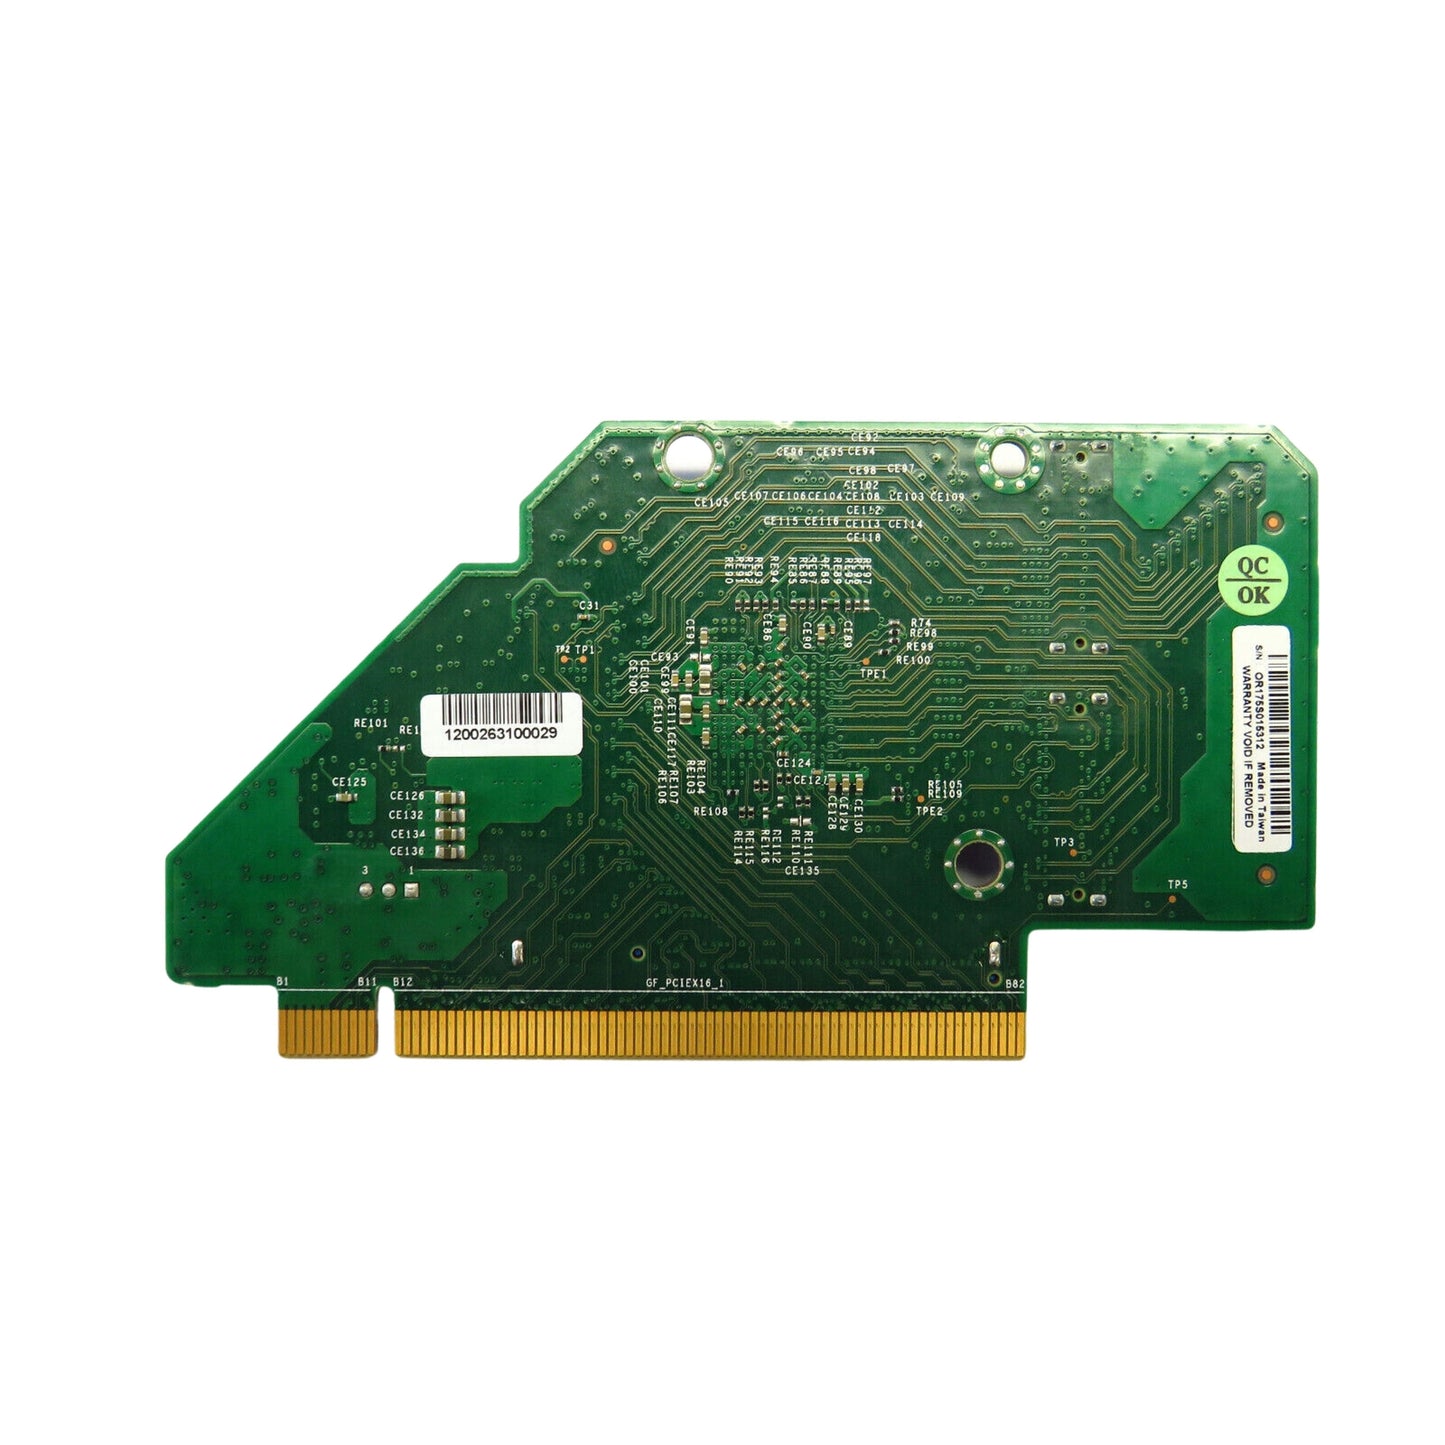 Supermicro RSC-W2R-A8P 01EM722 PCIe Riser Card for 5104-22C 9006-22C (Refurbished)